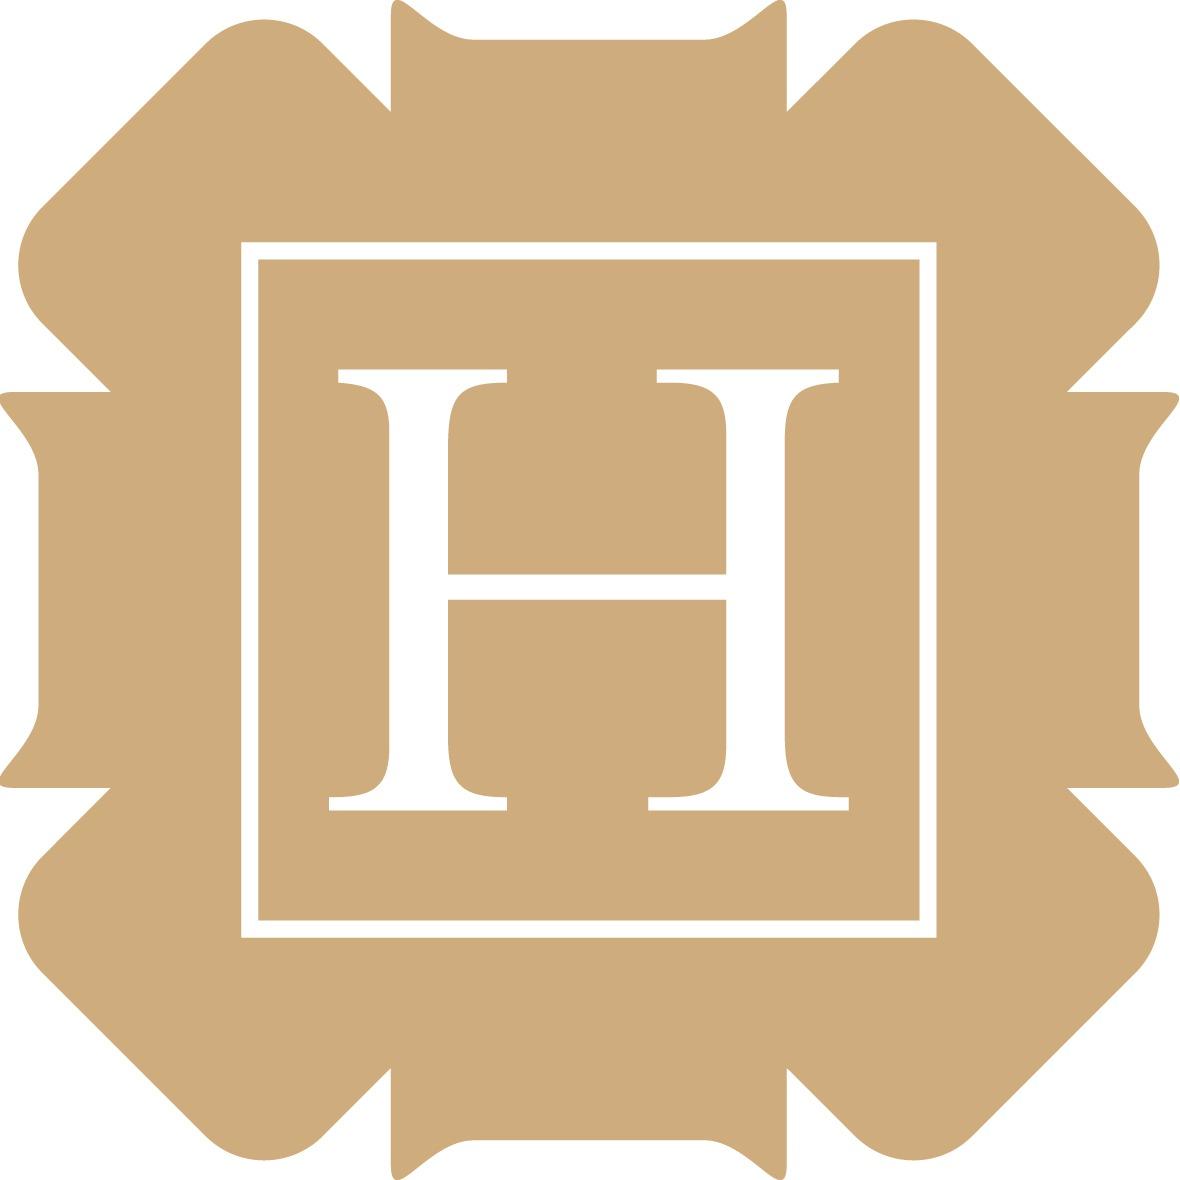 Harris Personal Injury Lawyers, Inc. Logo